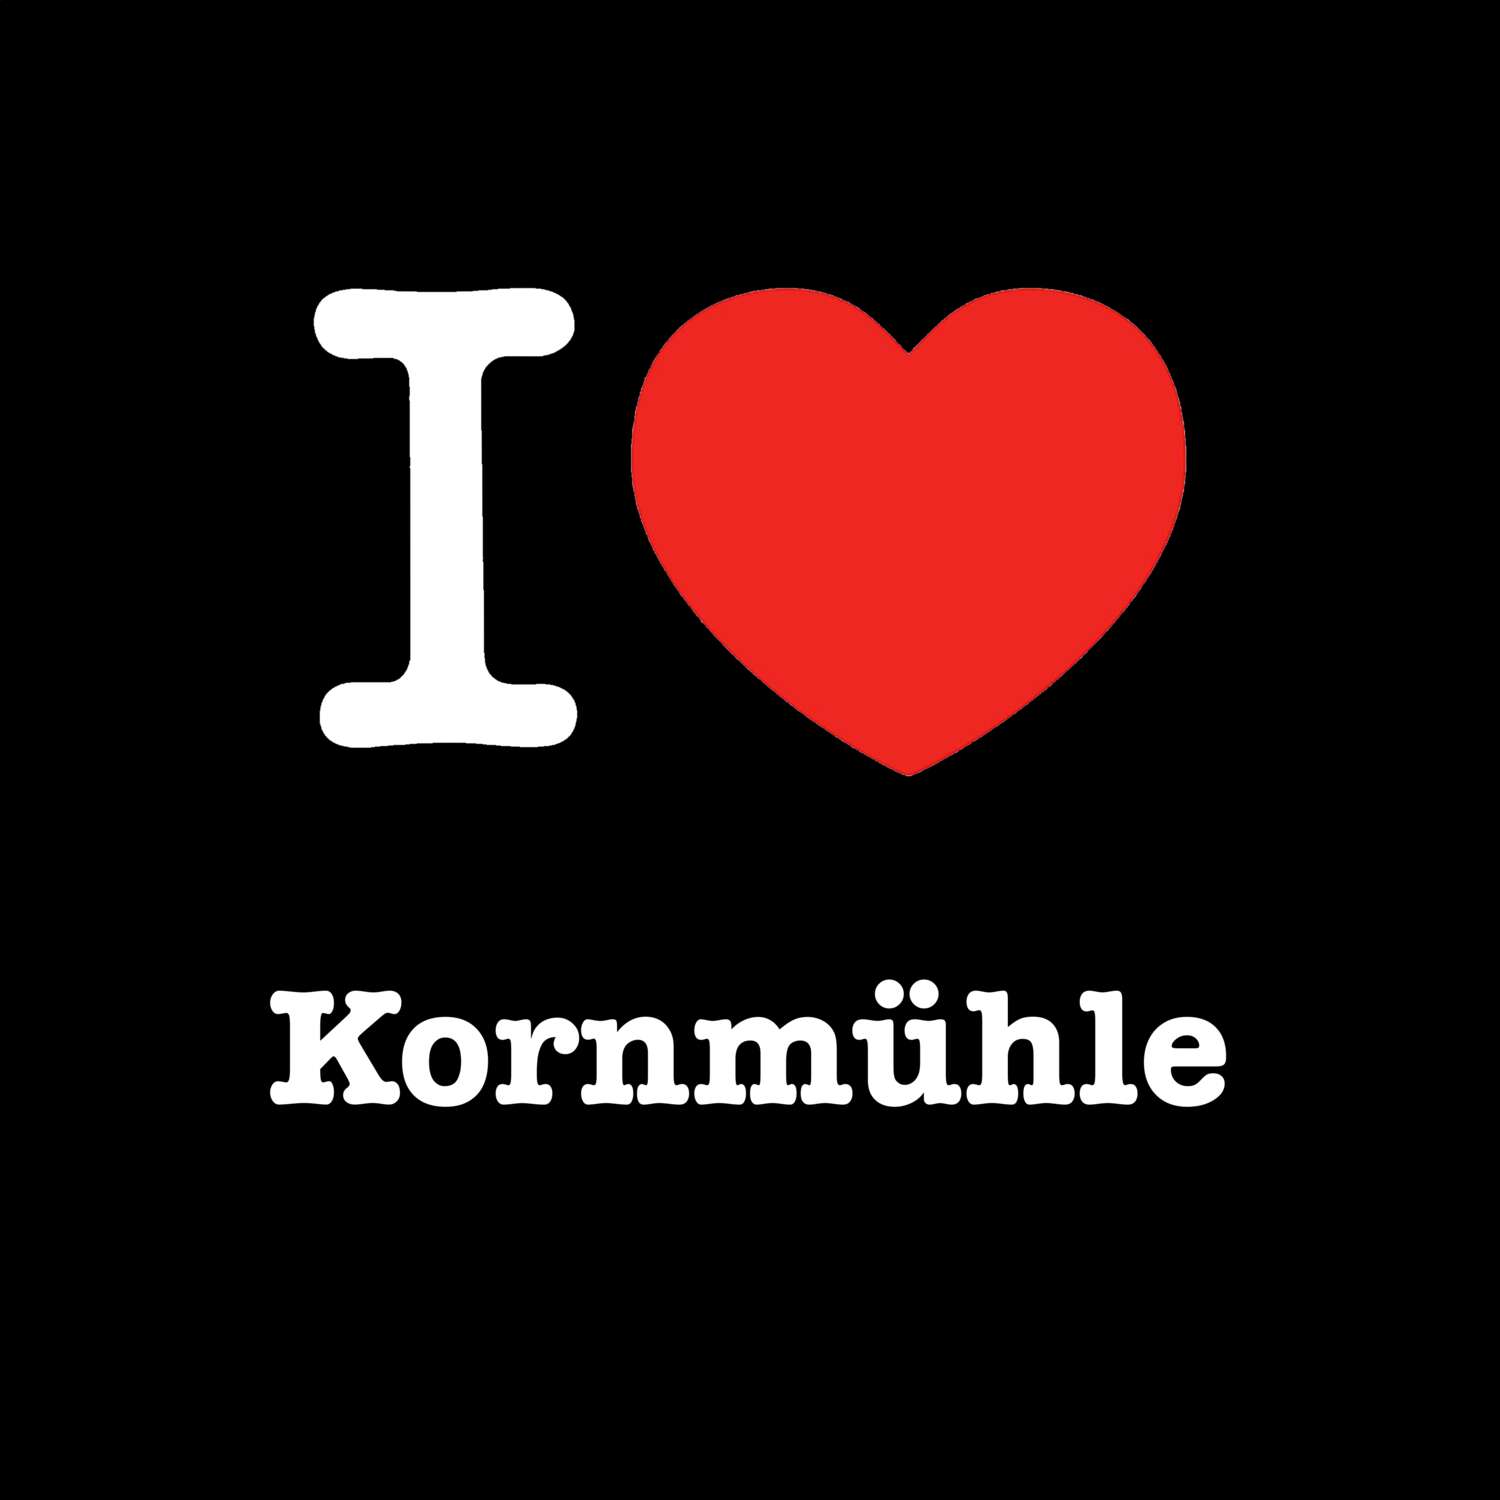 Kornmühle T-Shirt »I love«